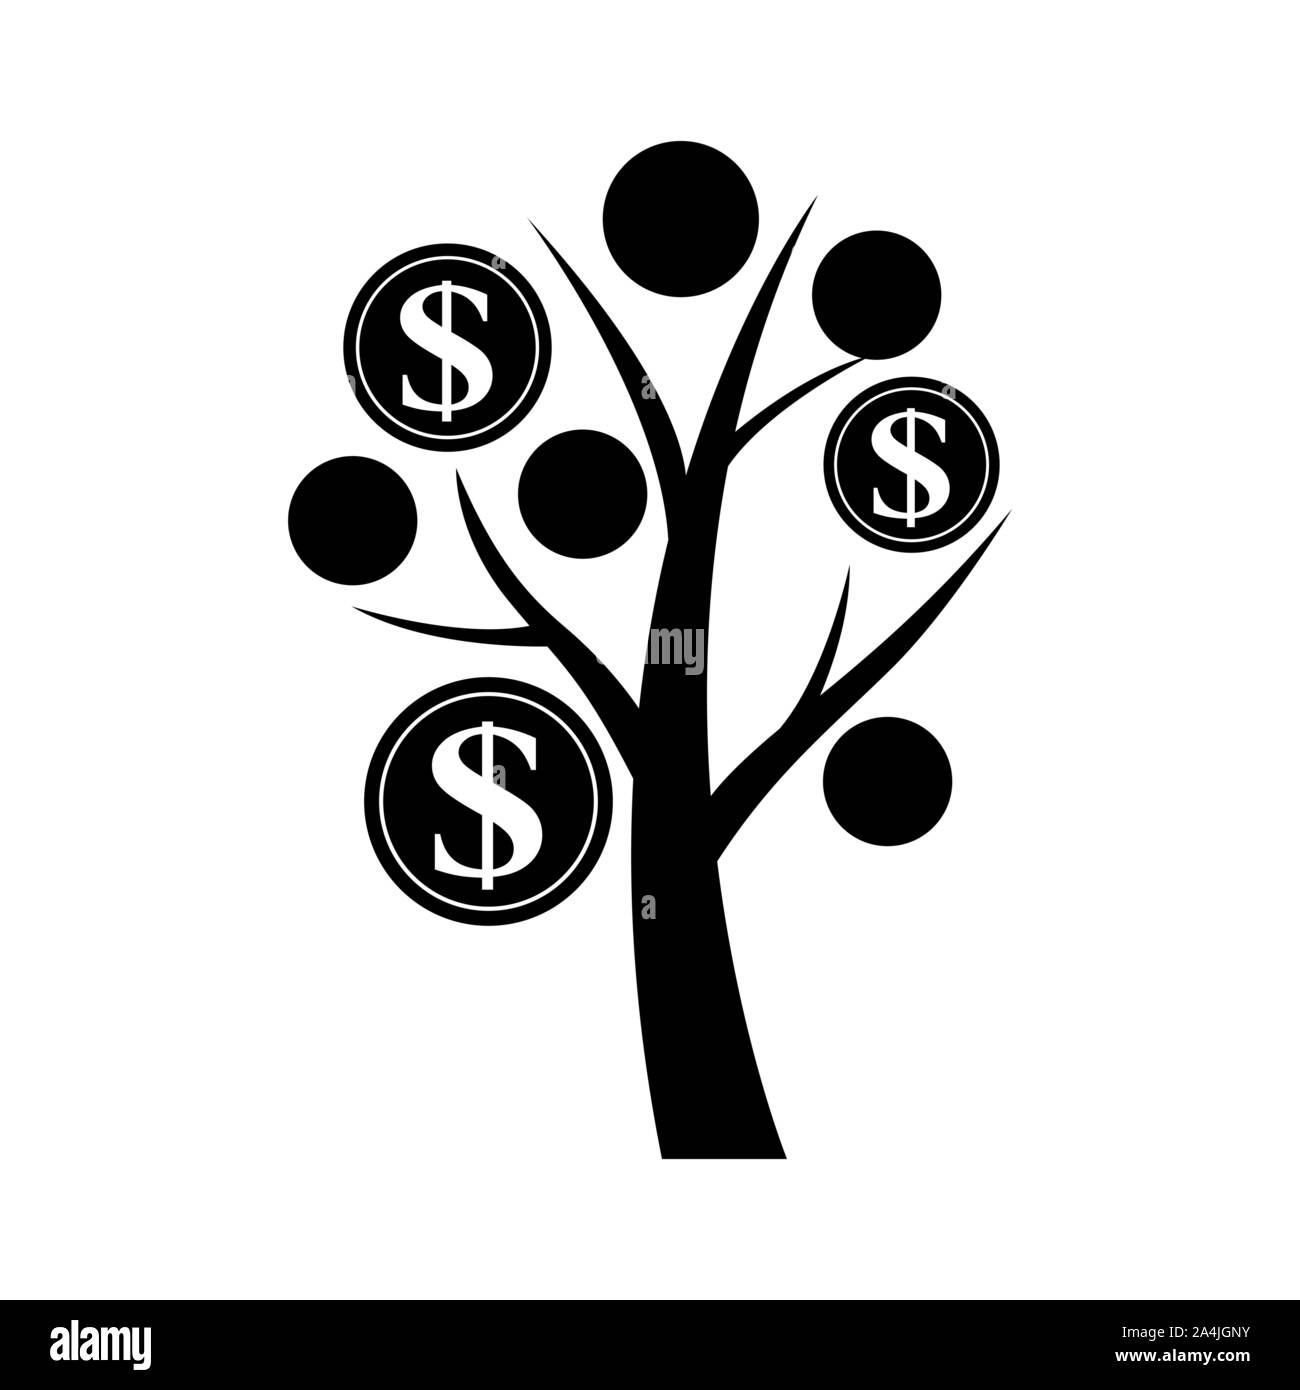 Money Tree Black And White Stock Photos Images Alamy